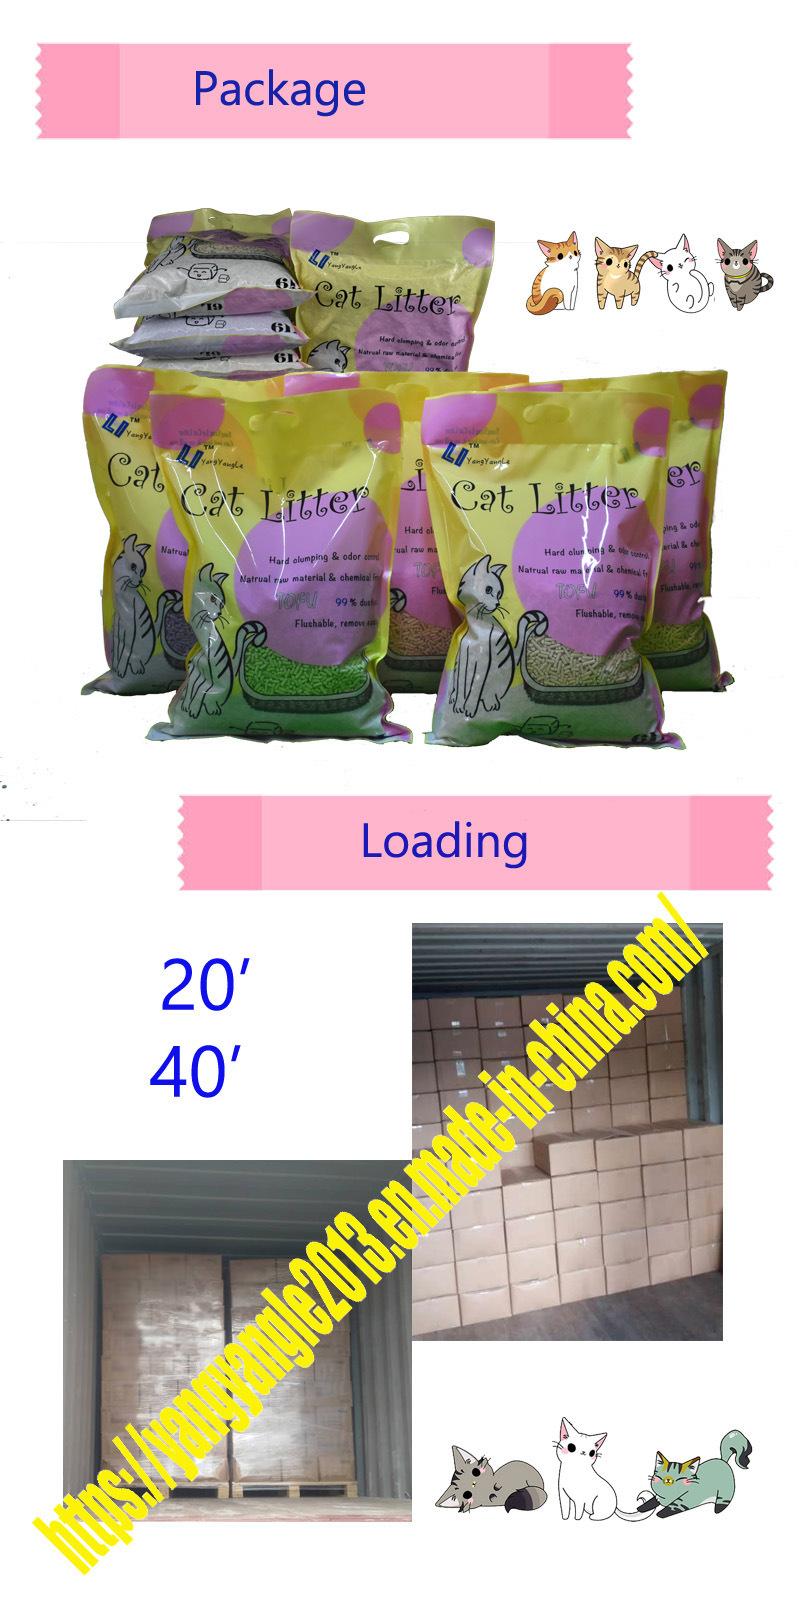 Pet Product: Hot Sell Fast Clump Corn Cat Litter (YYLC01)